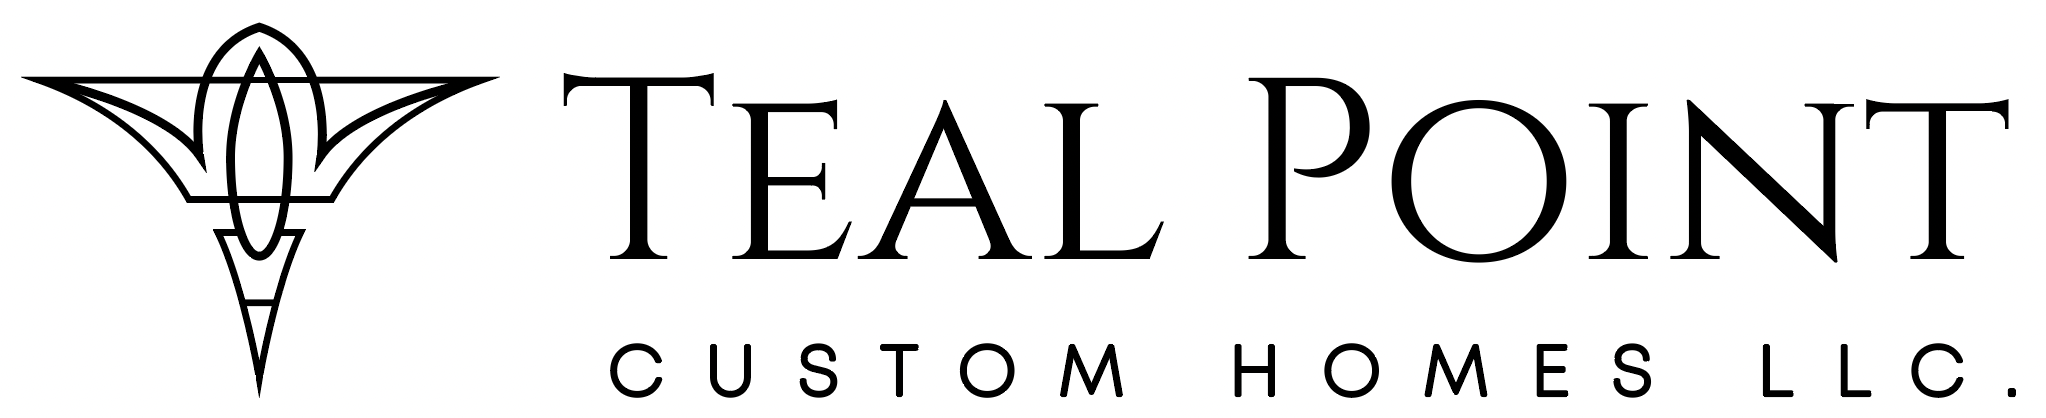 teal point custom homes logo